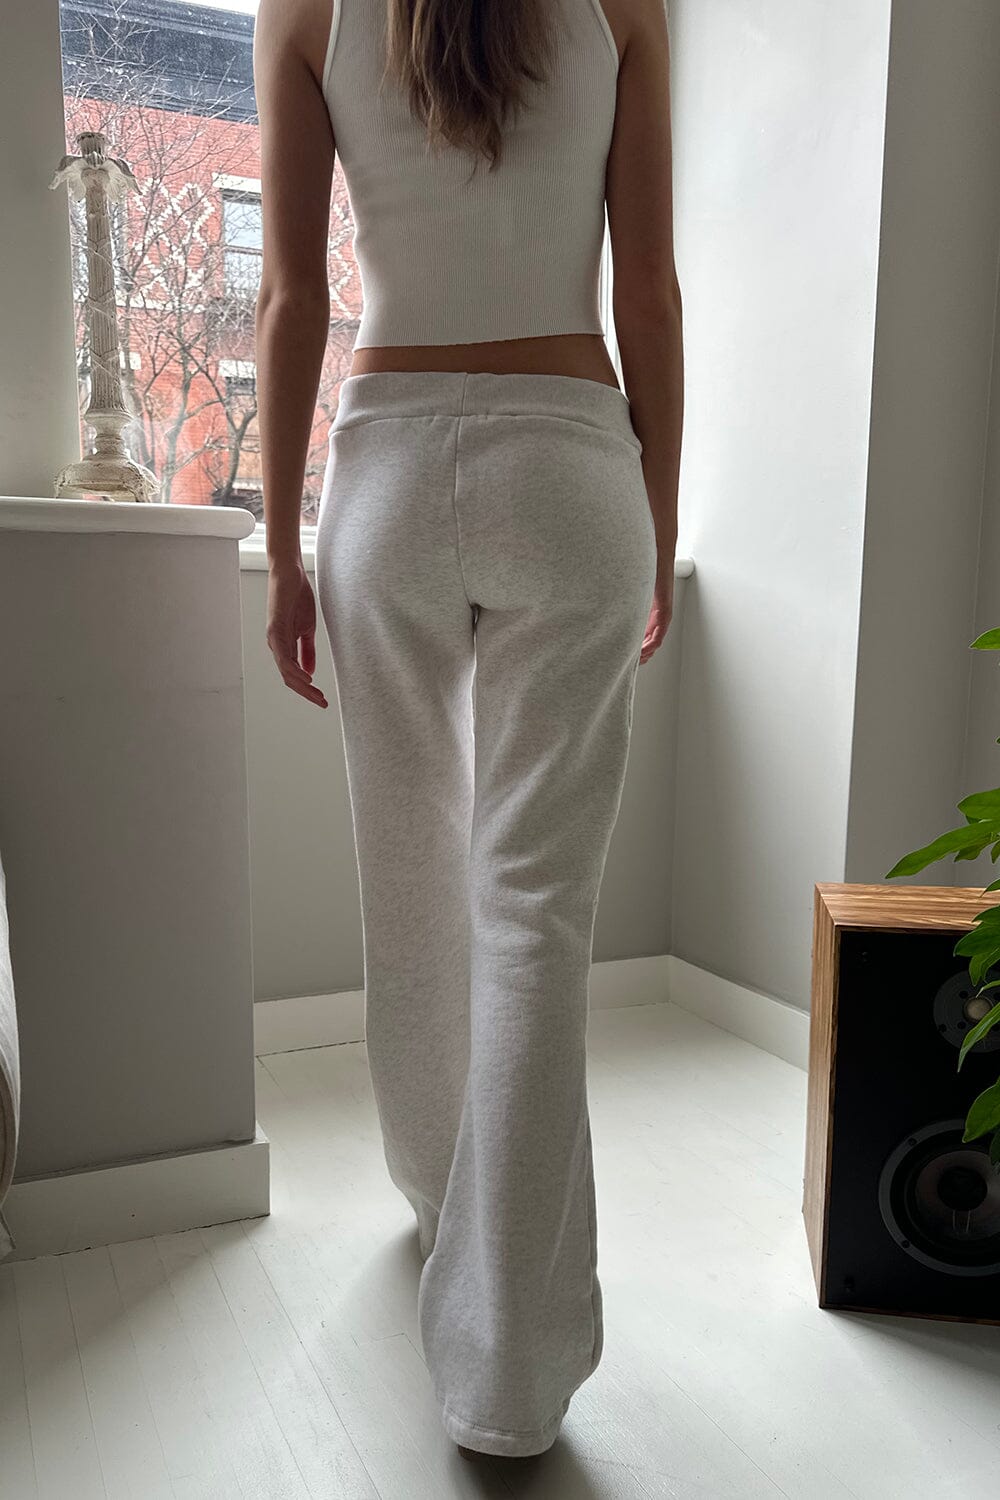 Brandy Melville hillary soft yoga pants Gray Size 25 - $17 (51